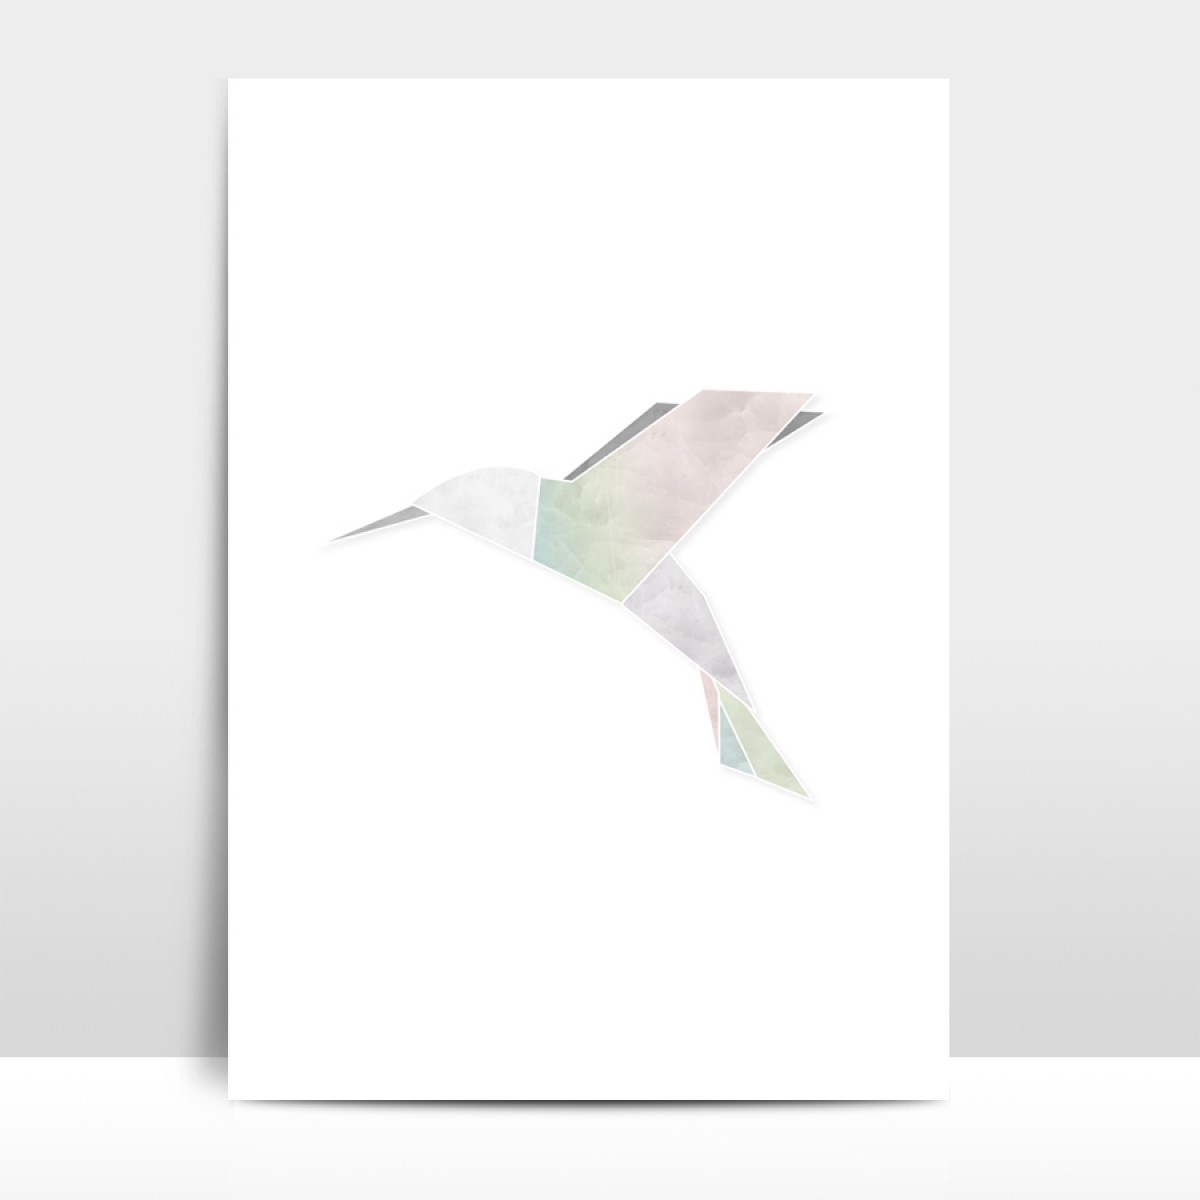 Amy & Kurt Berlin A3 Artprint "Origami Kolibri"